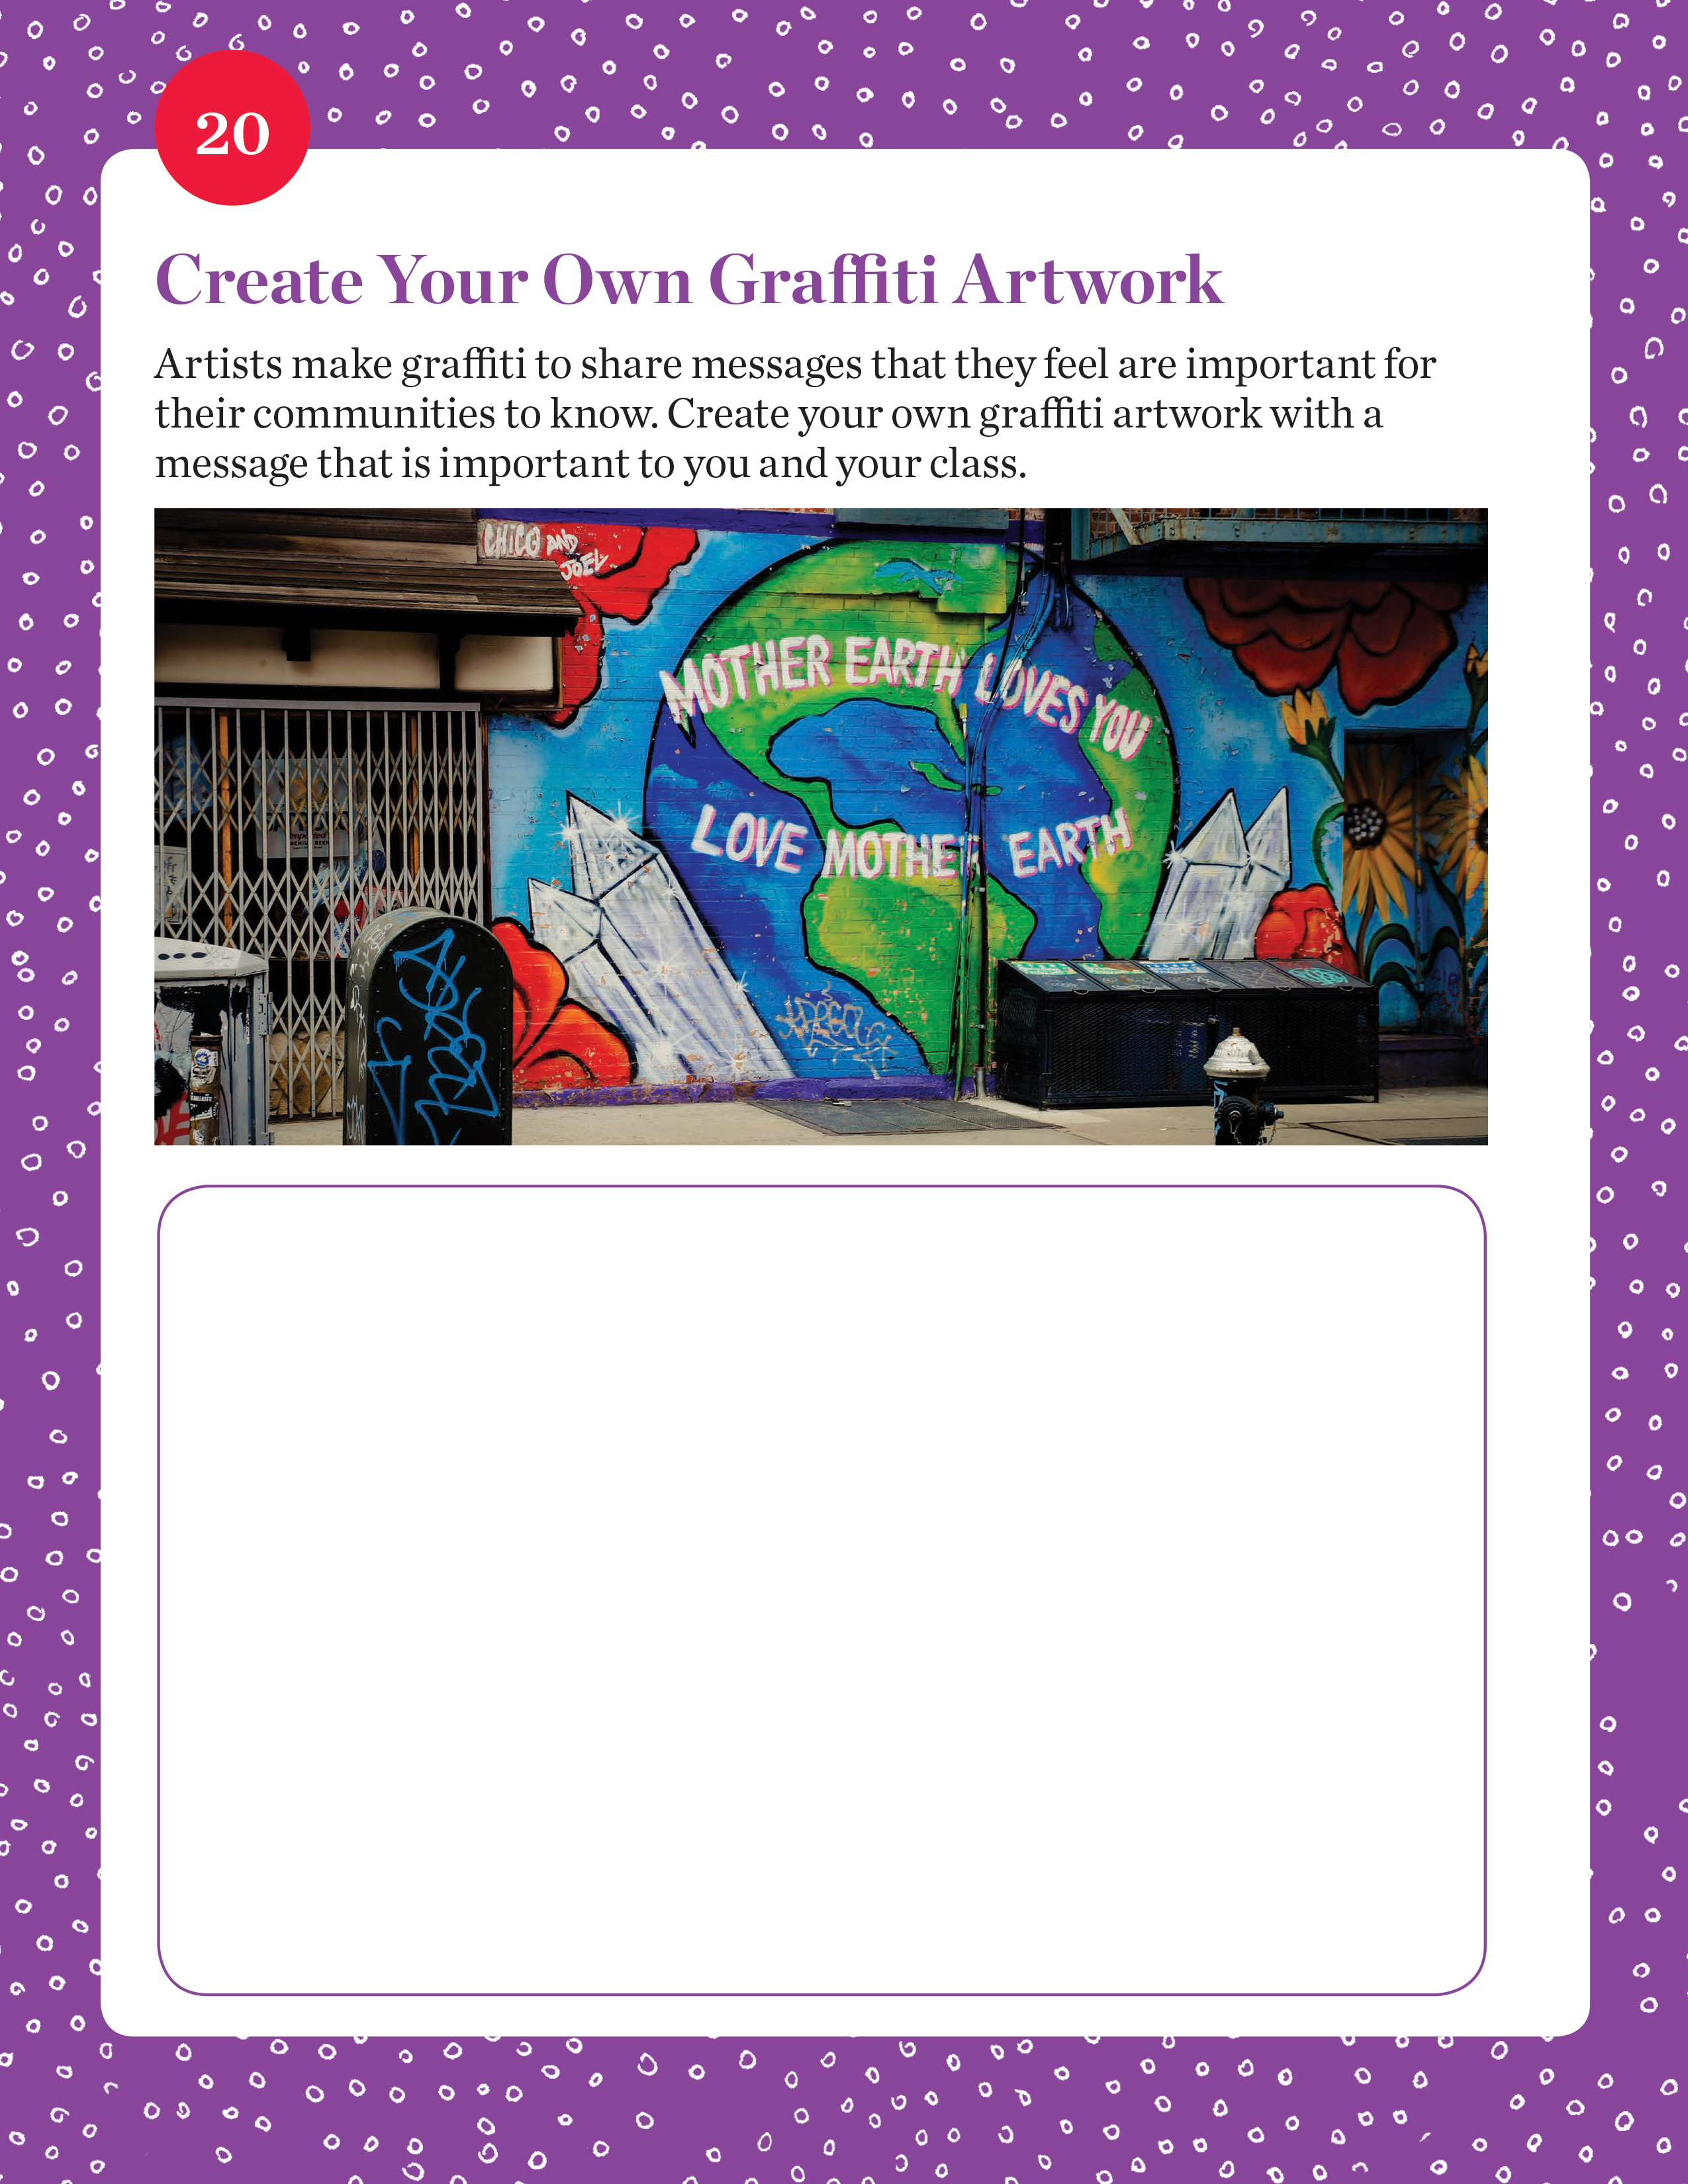 Create Your Own Graffiti Artwork student activity